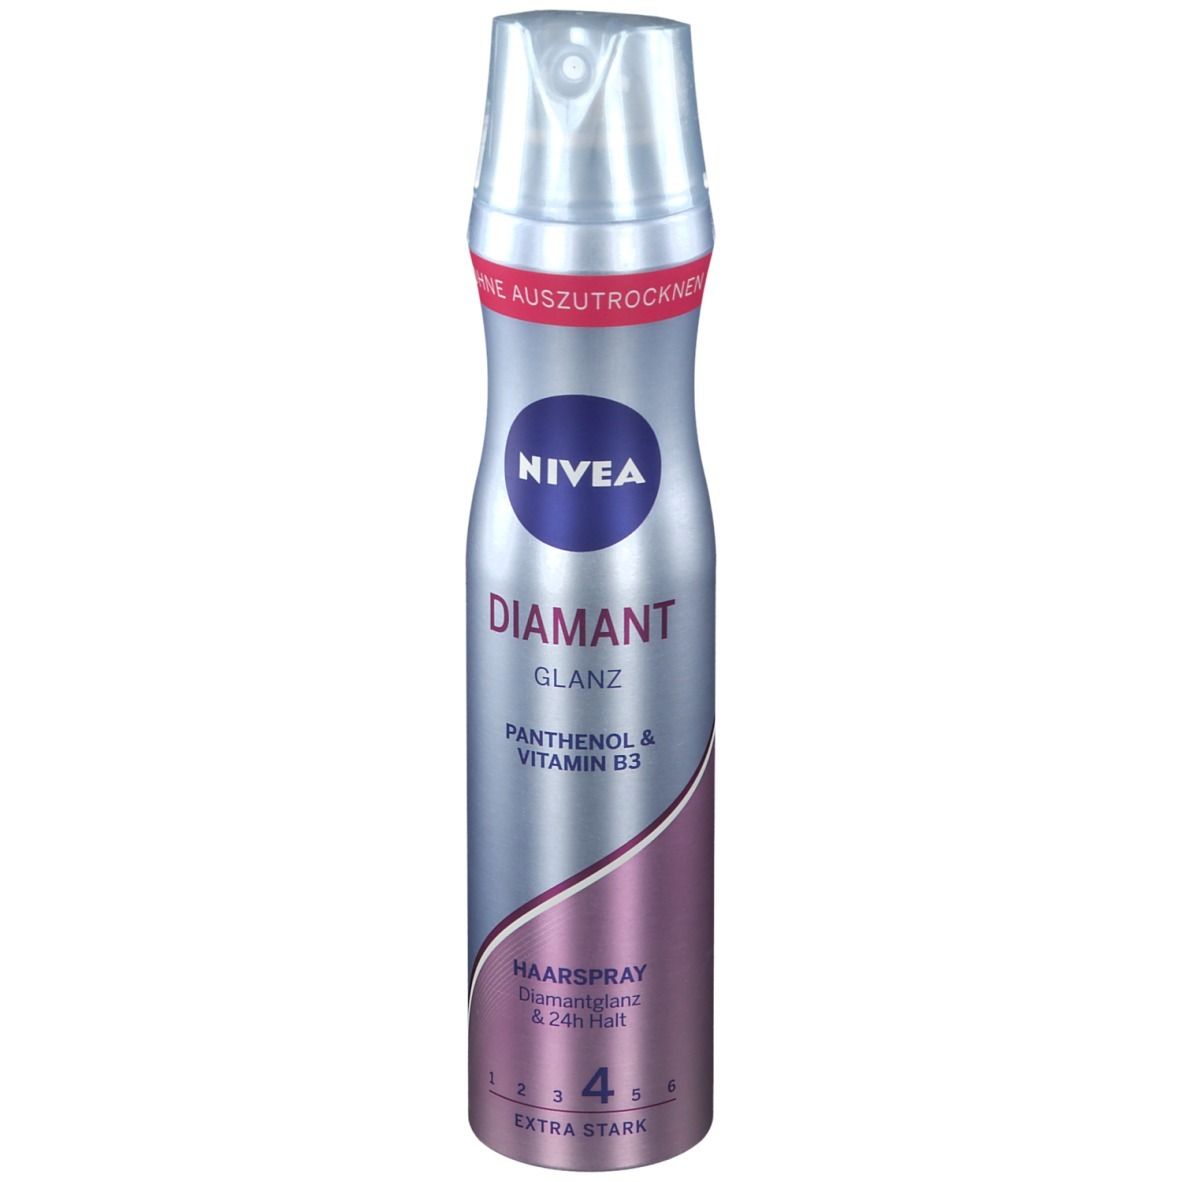 NIVEA® Diamant Glanz & Pflege Haarspray